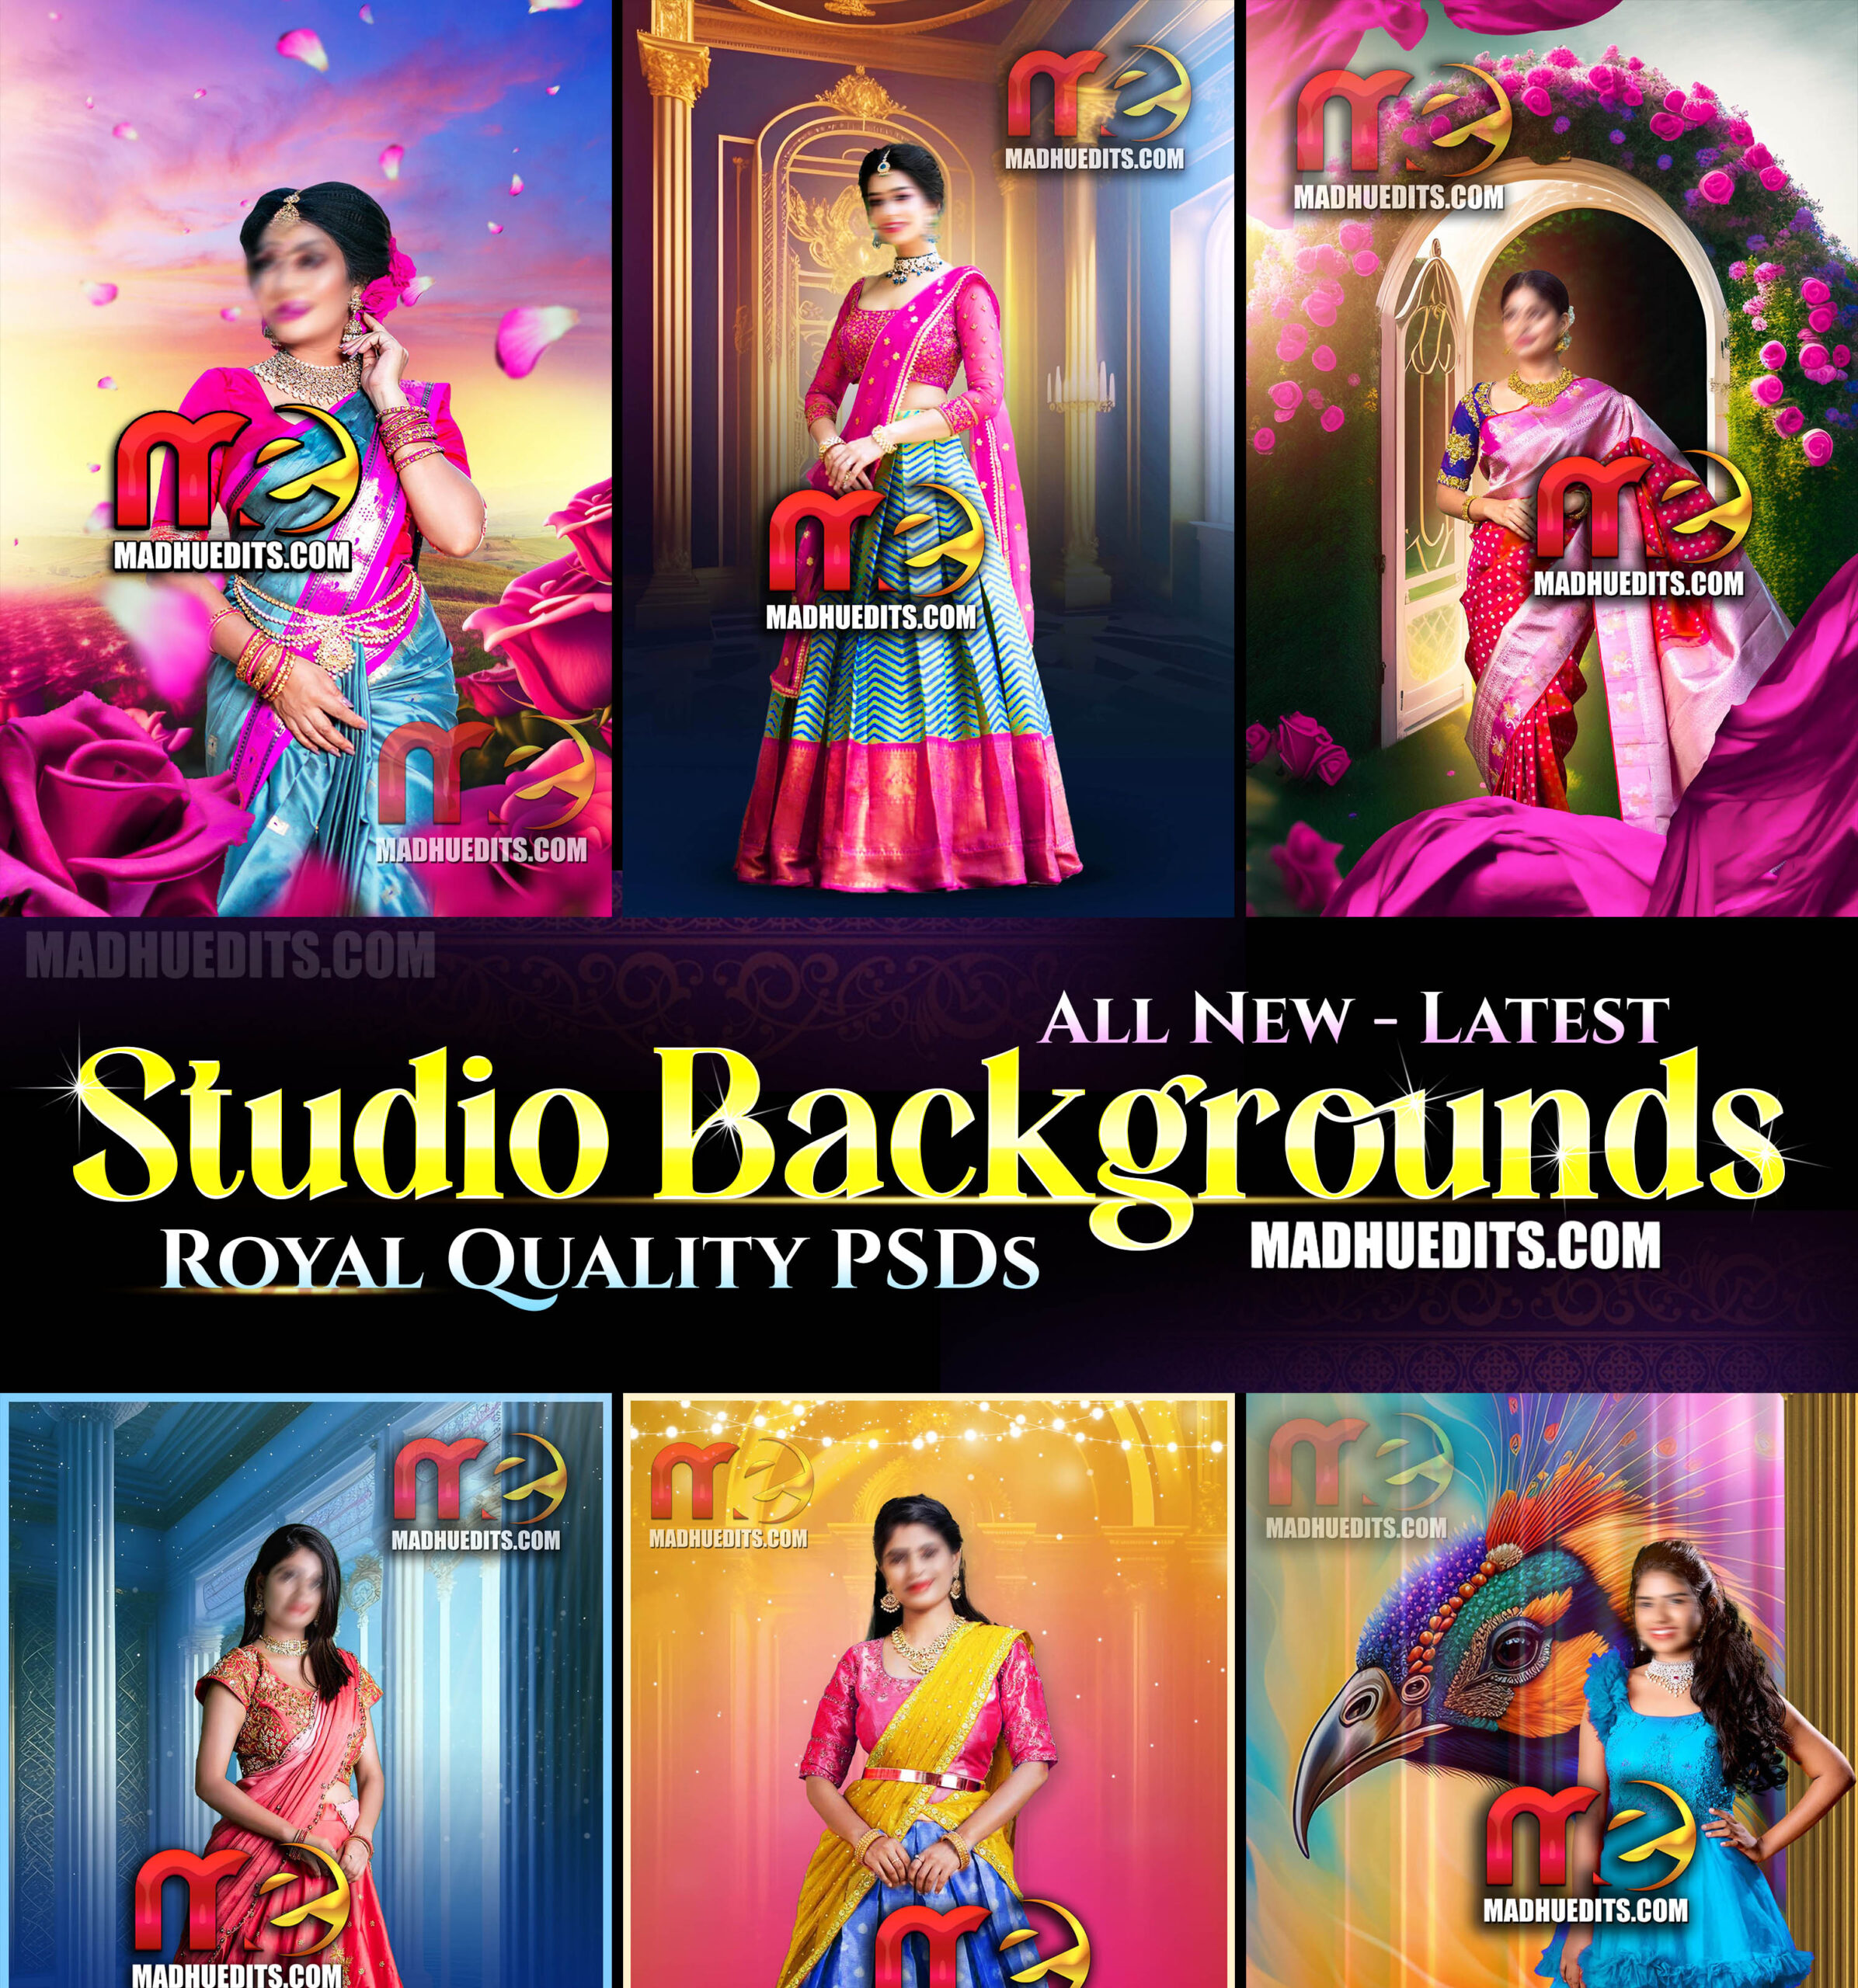 digital studio background psd file free download